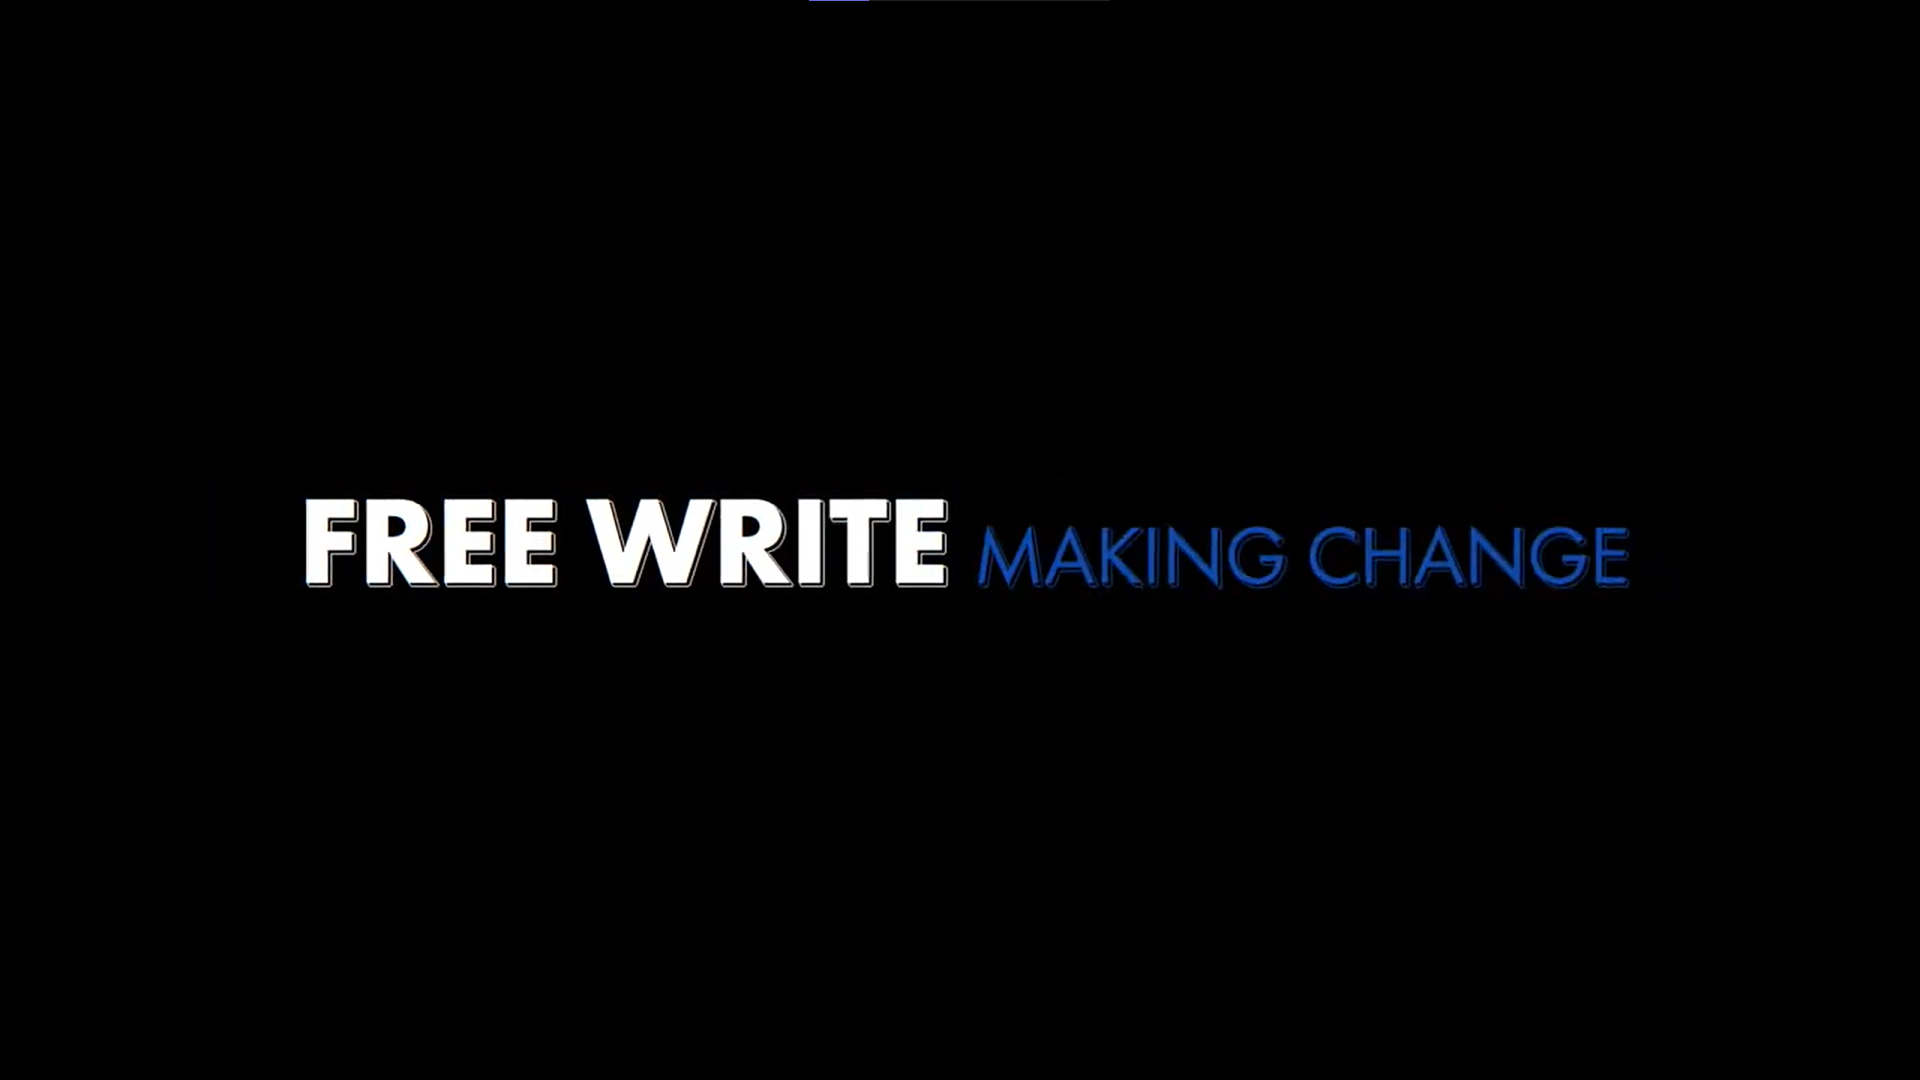 "Making Change" Free Write Title Card